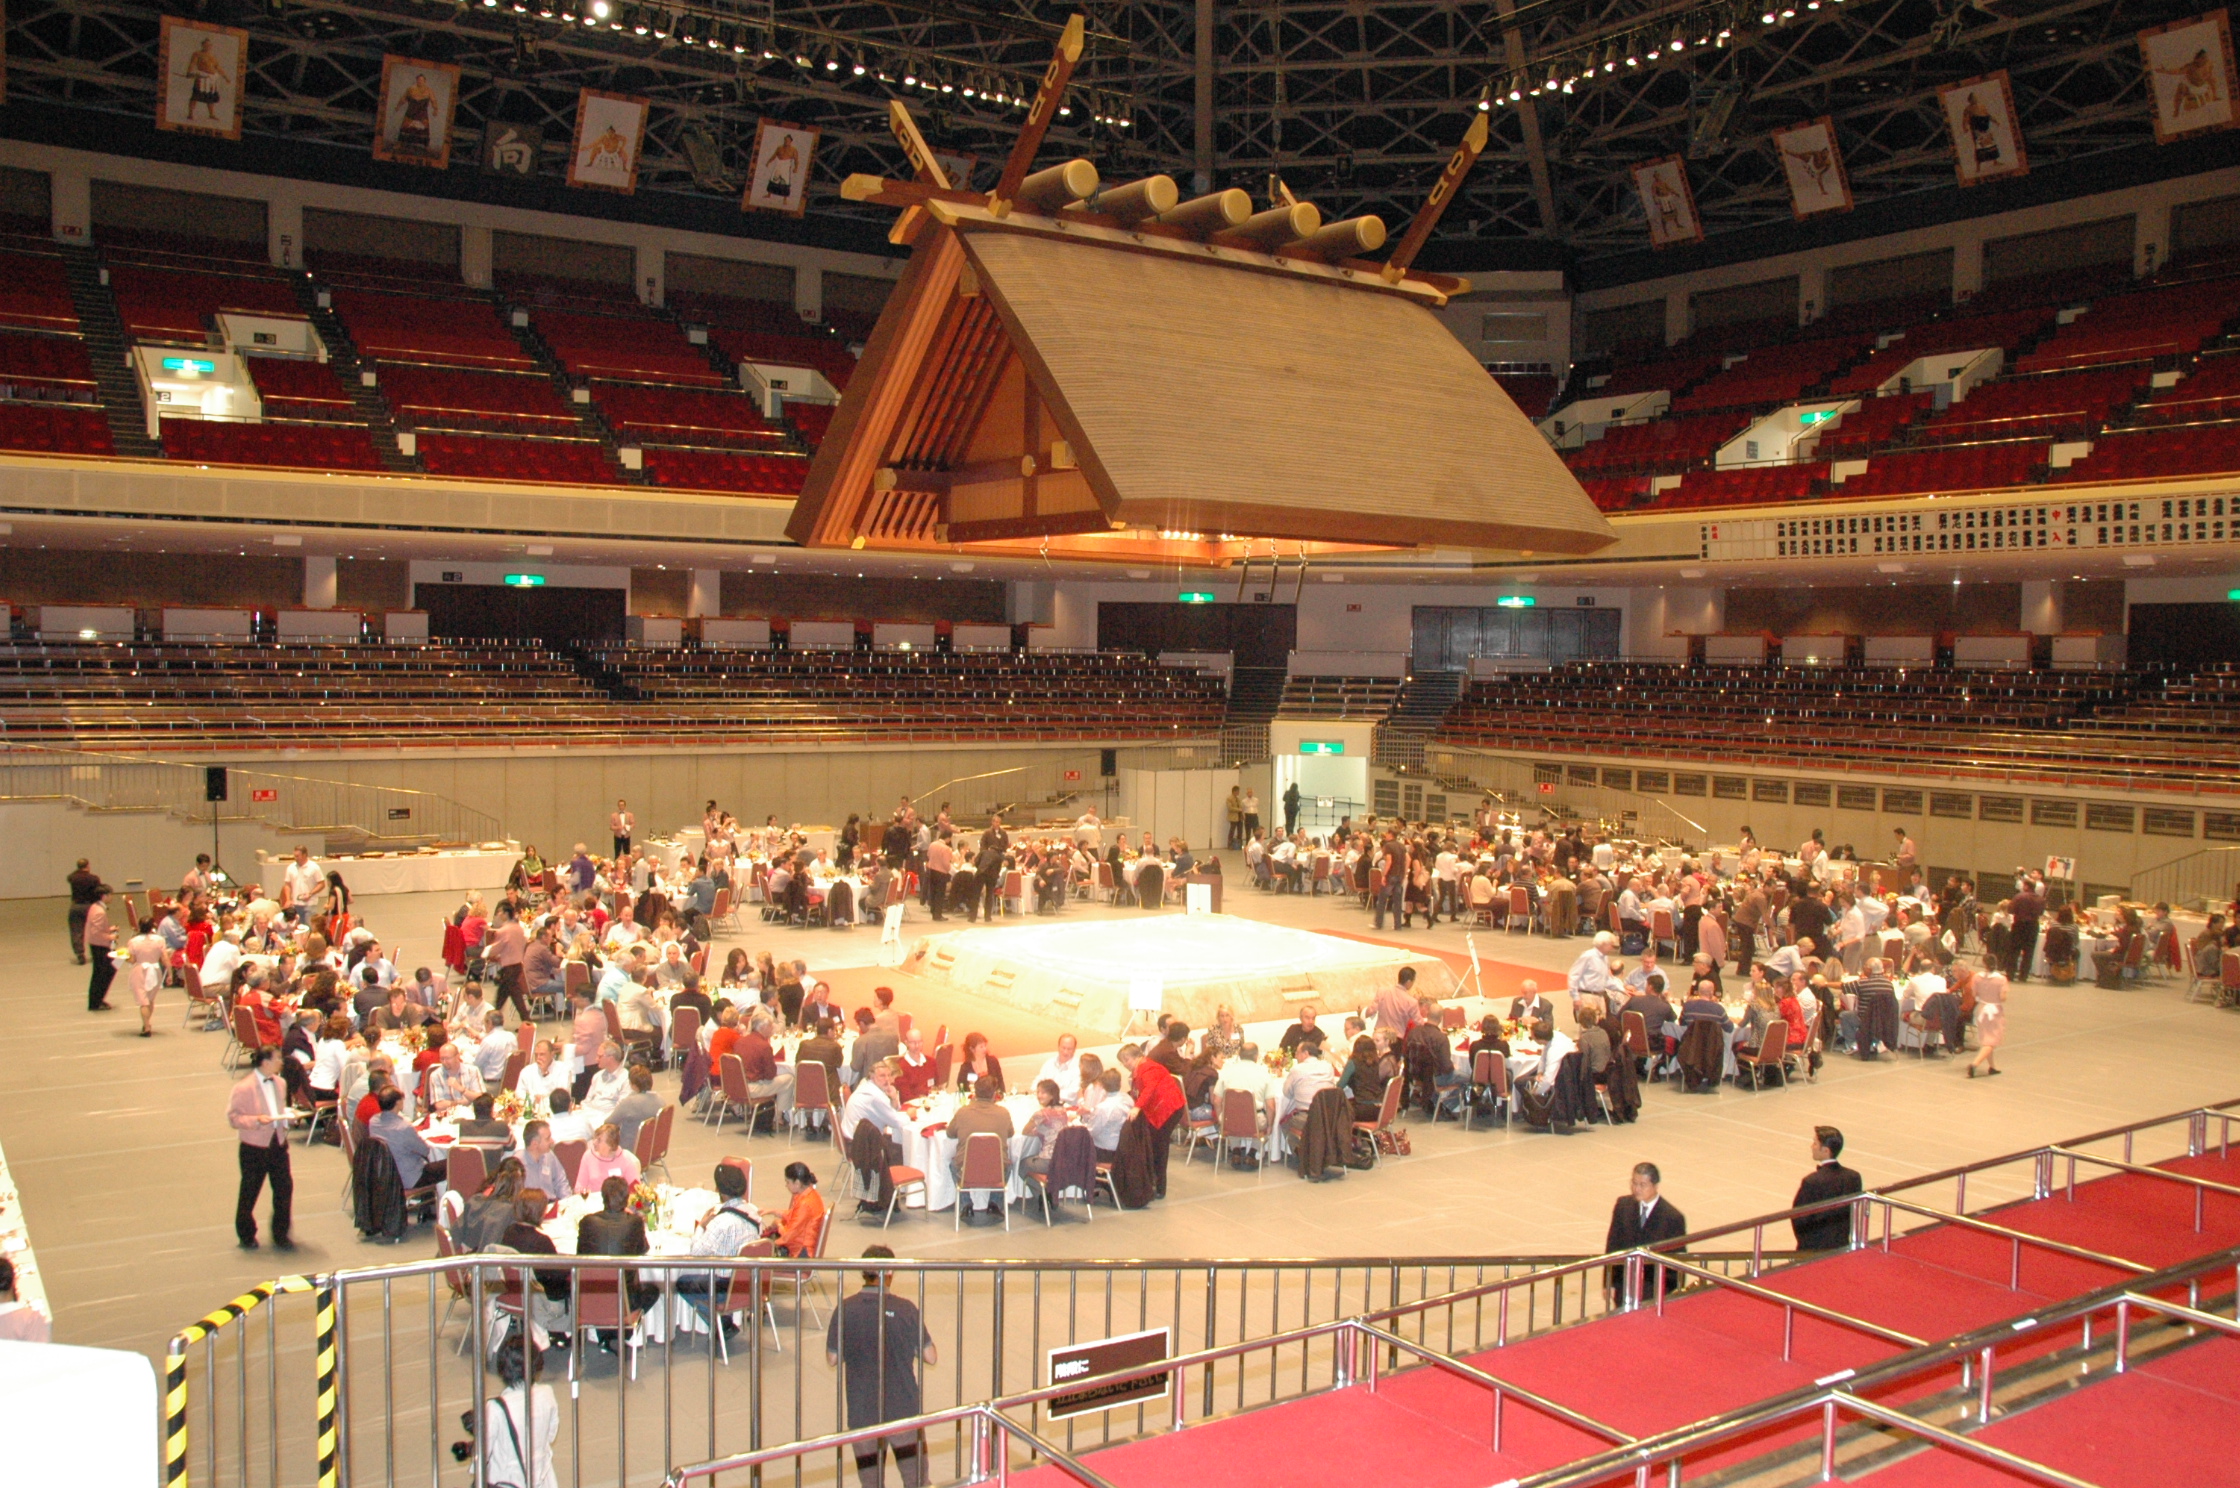 A Meeting Venue Found Only In Japan  -Ryogoku Sumo Stadium-